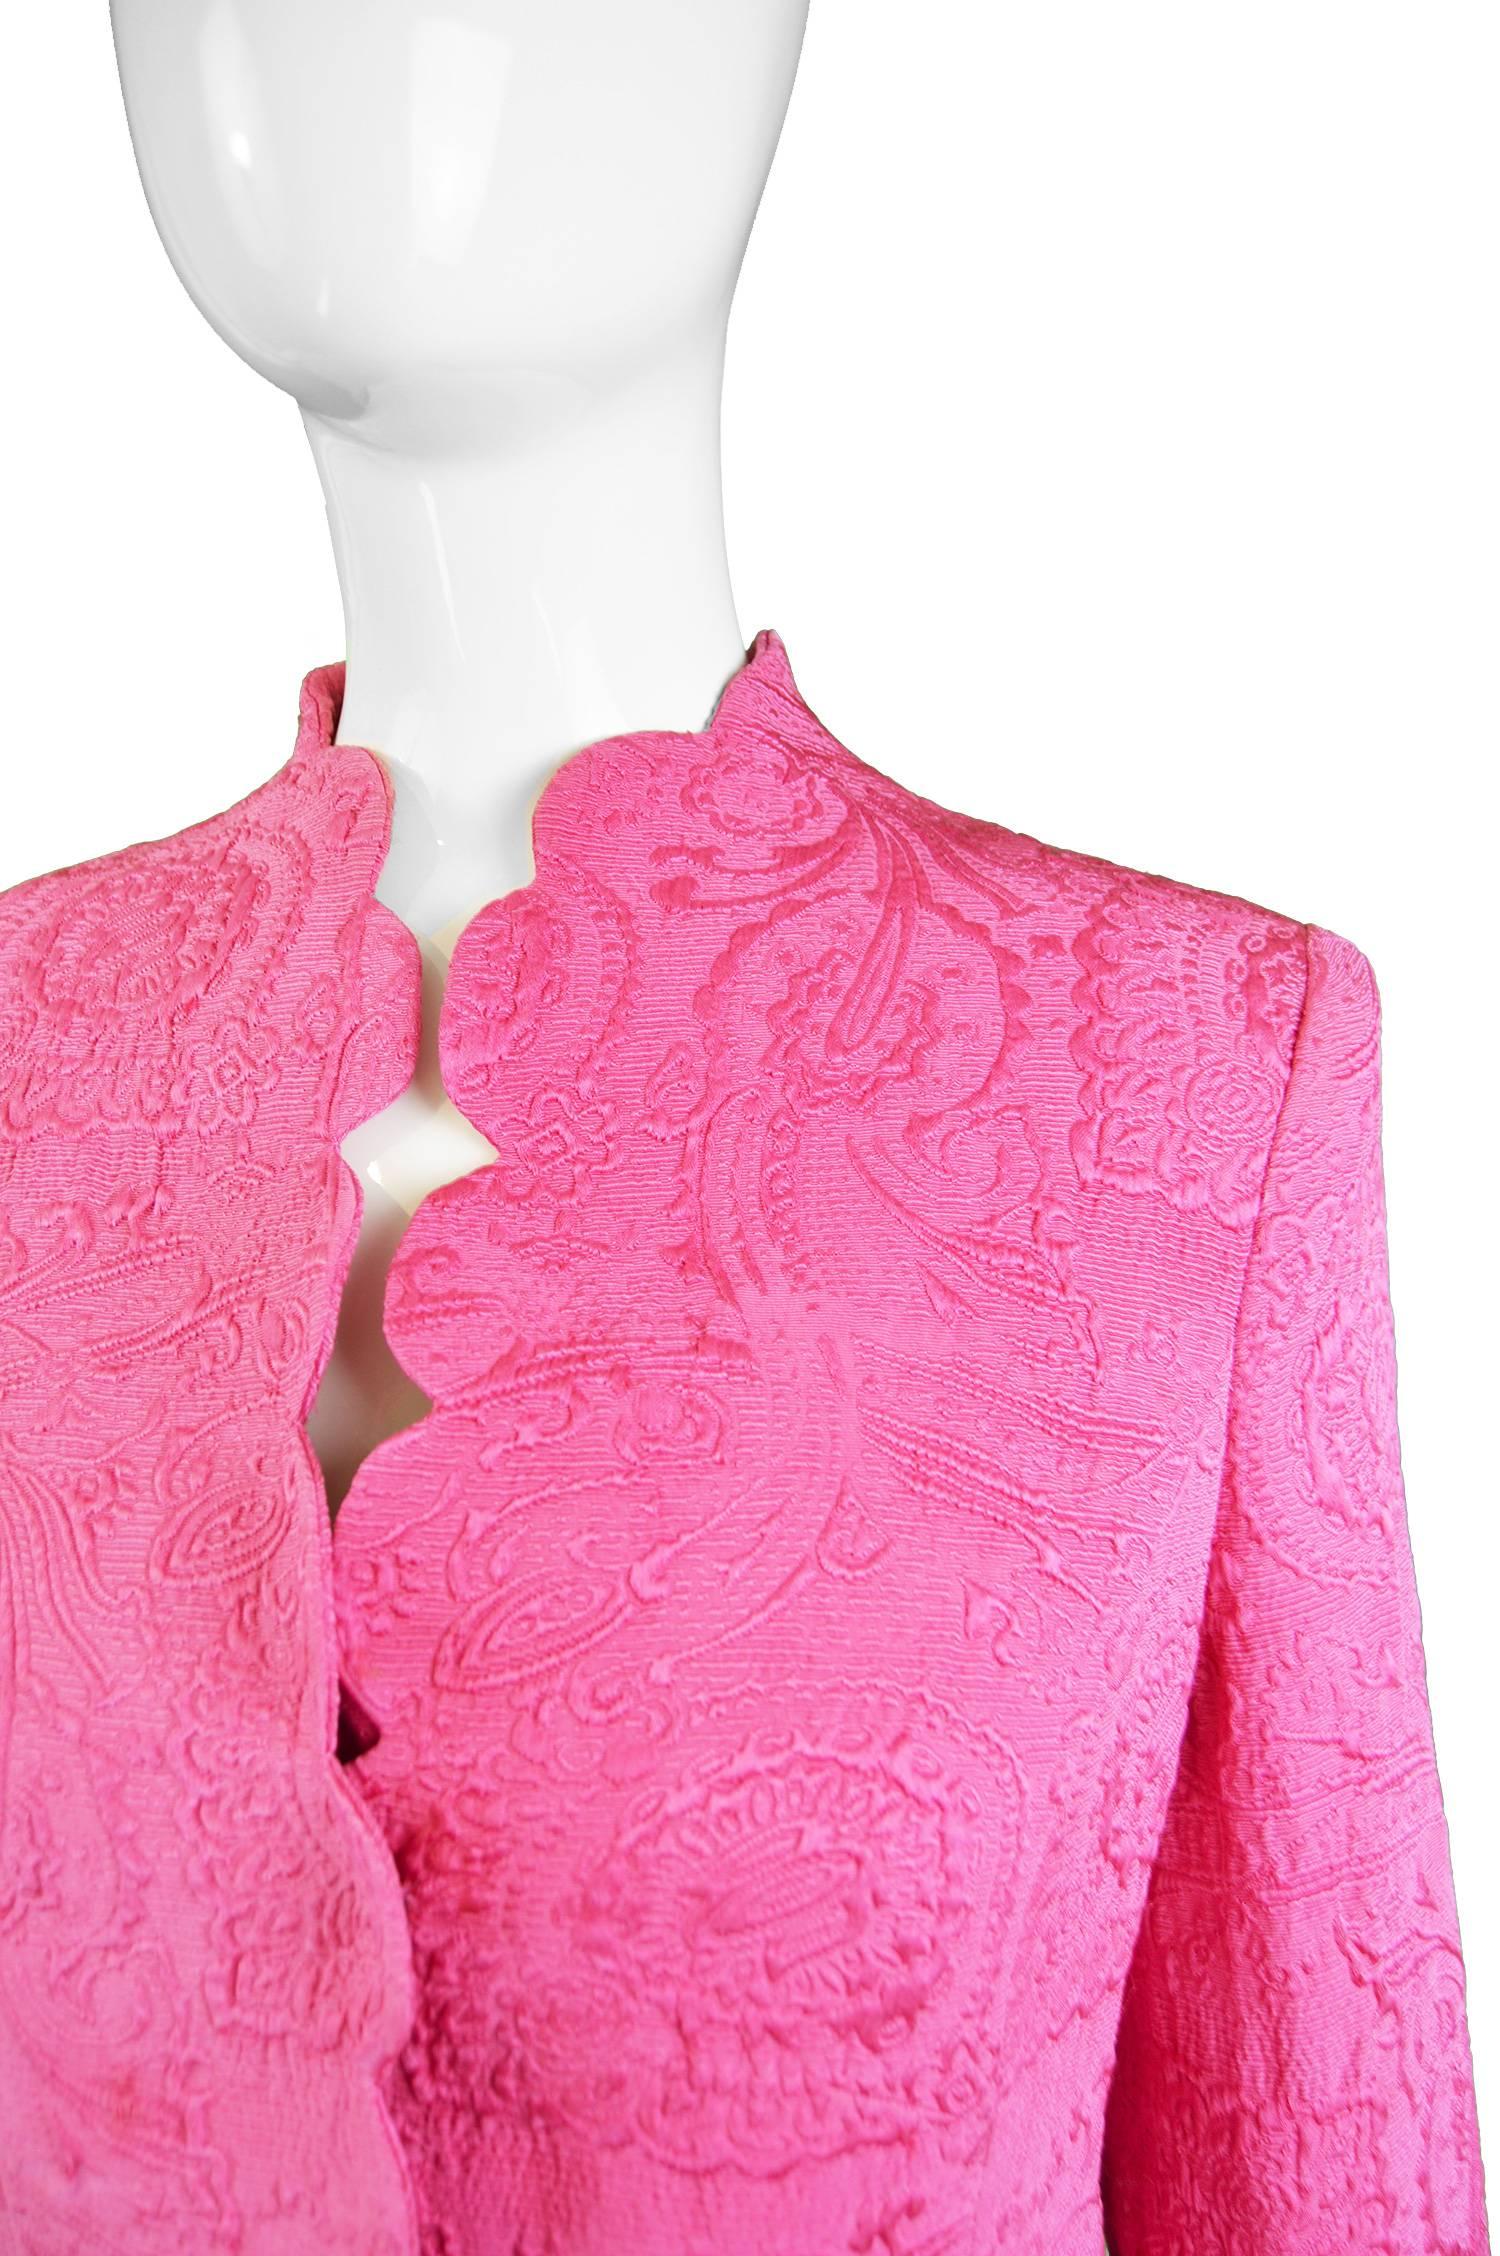 Women's Raffaella Curiel Couture Vintage Pink Brocade Jacket and Dress Suit, 1990s